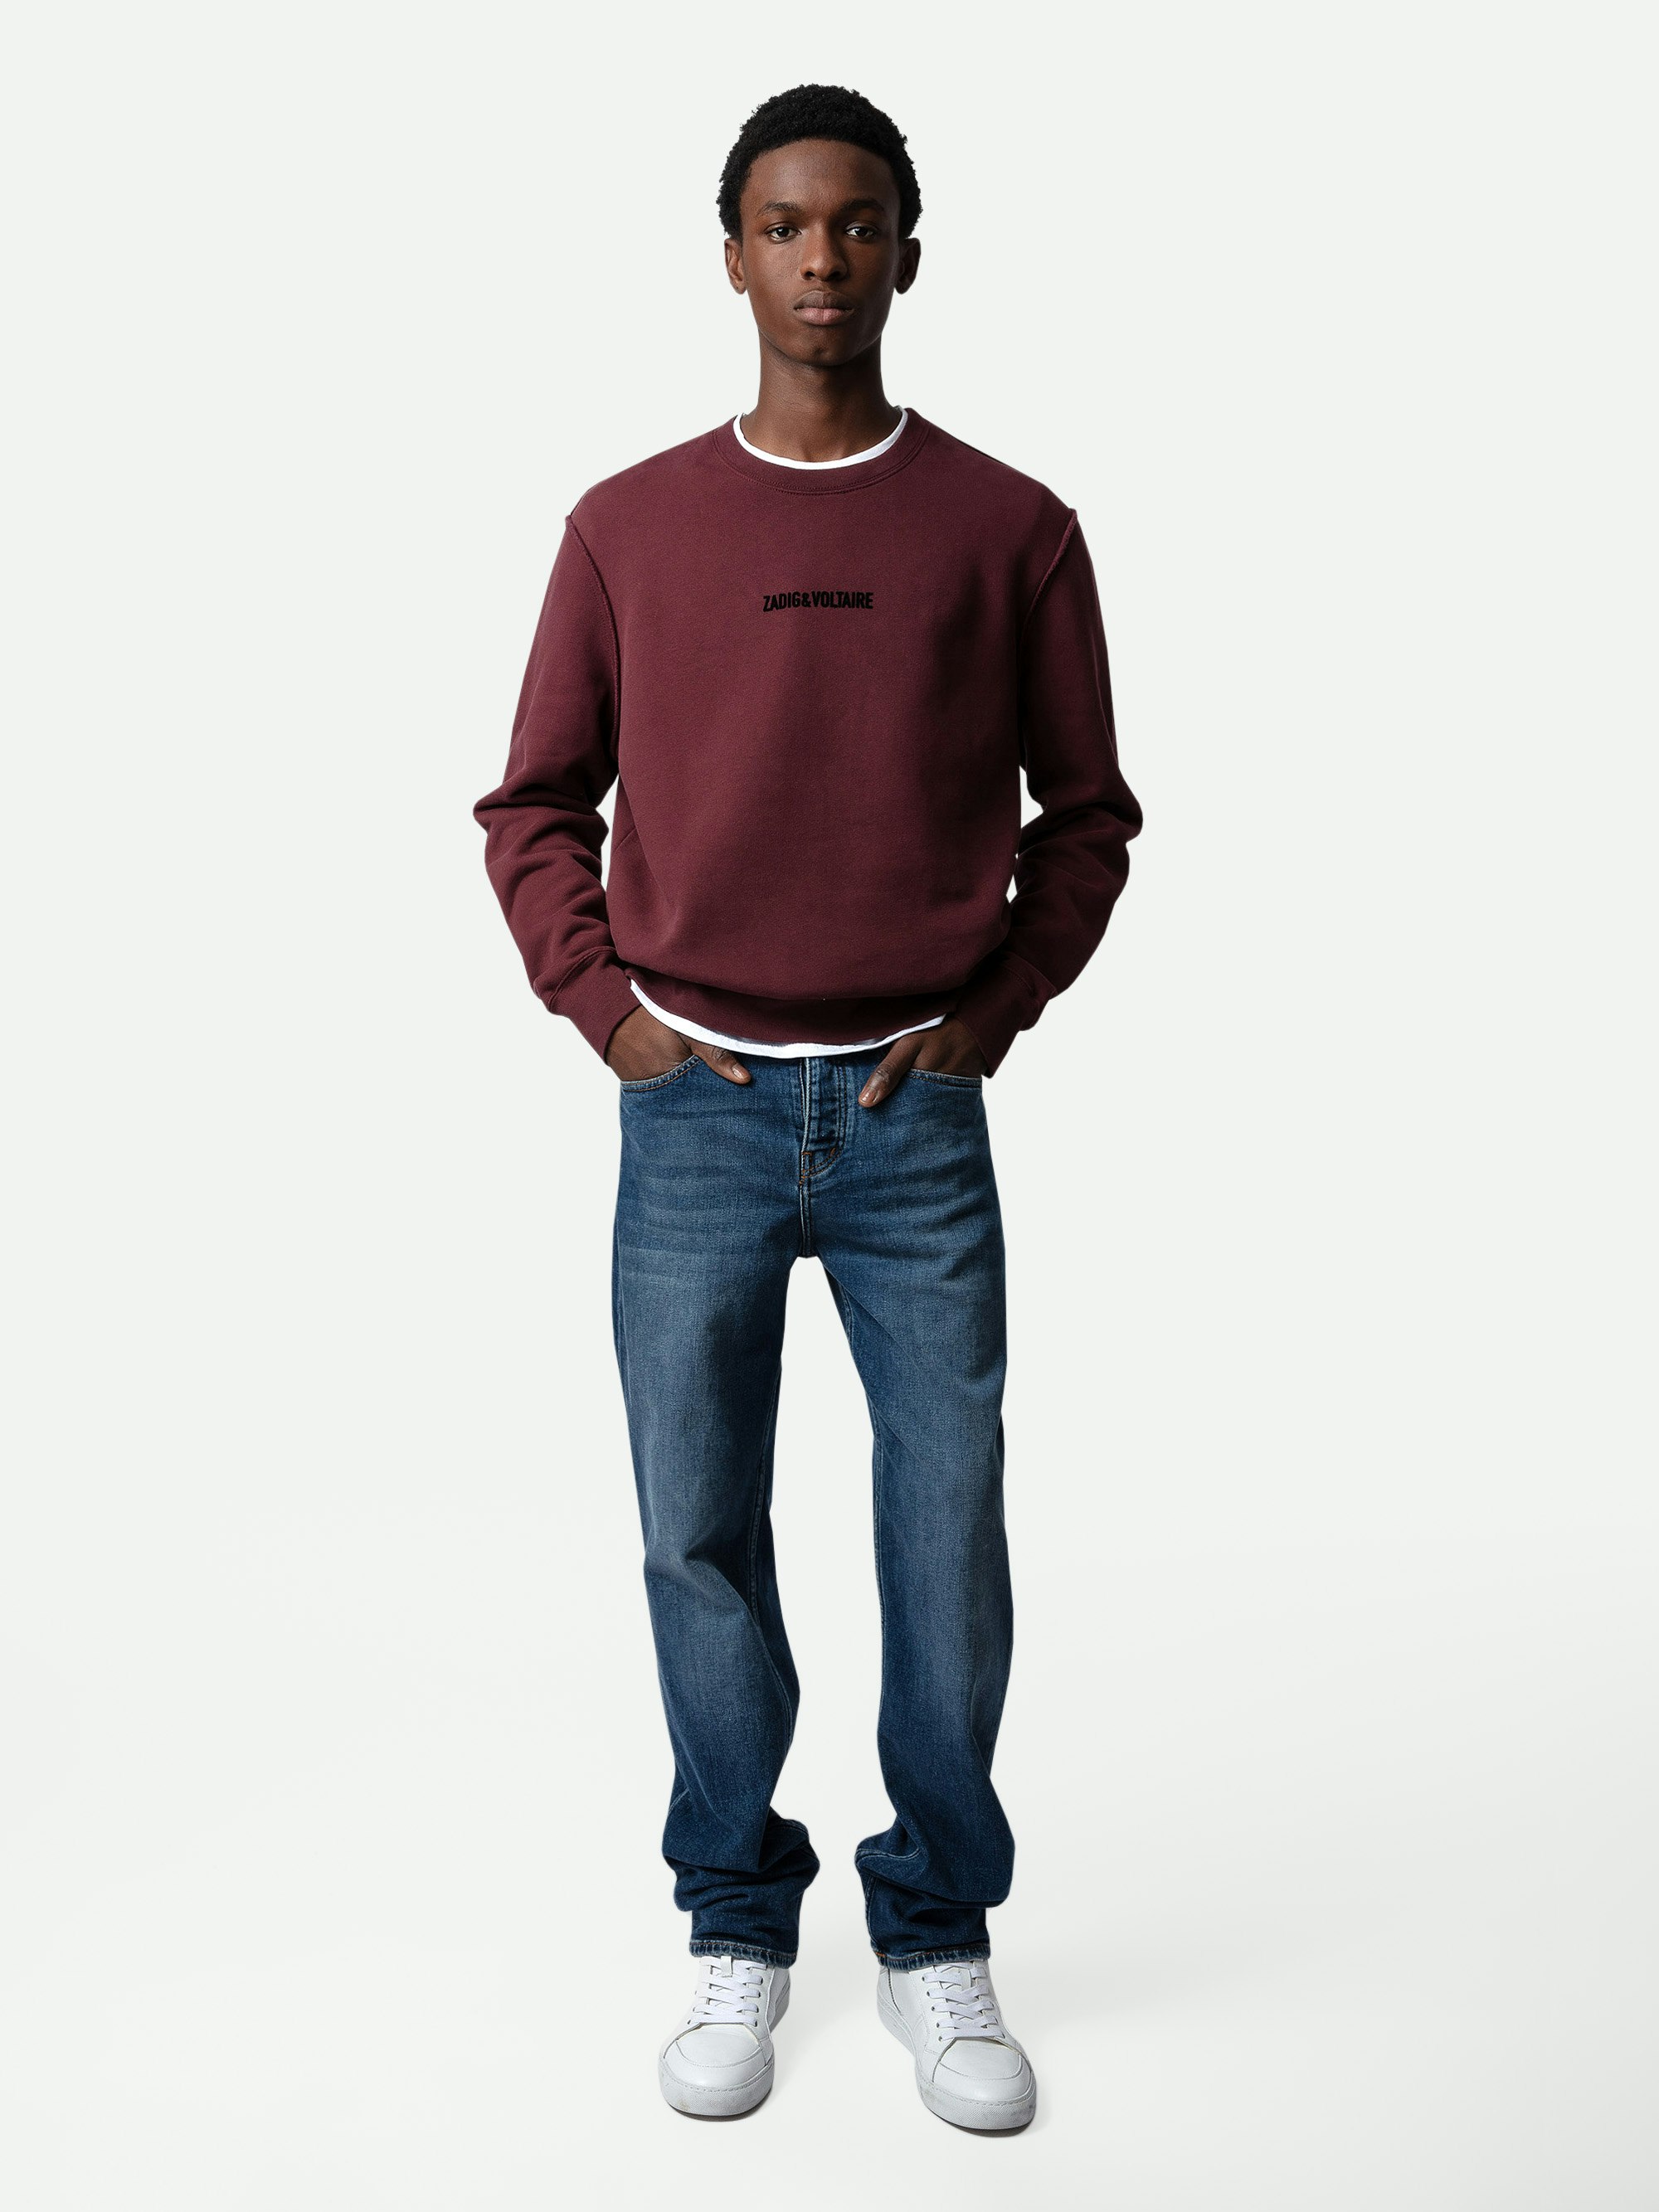 Simba Sweatshirt - Burgundy long-sleeved sweatshirt with signature and Doberman print.